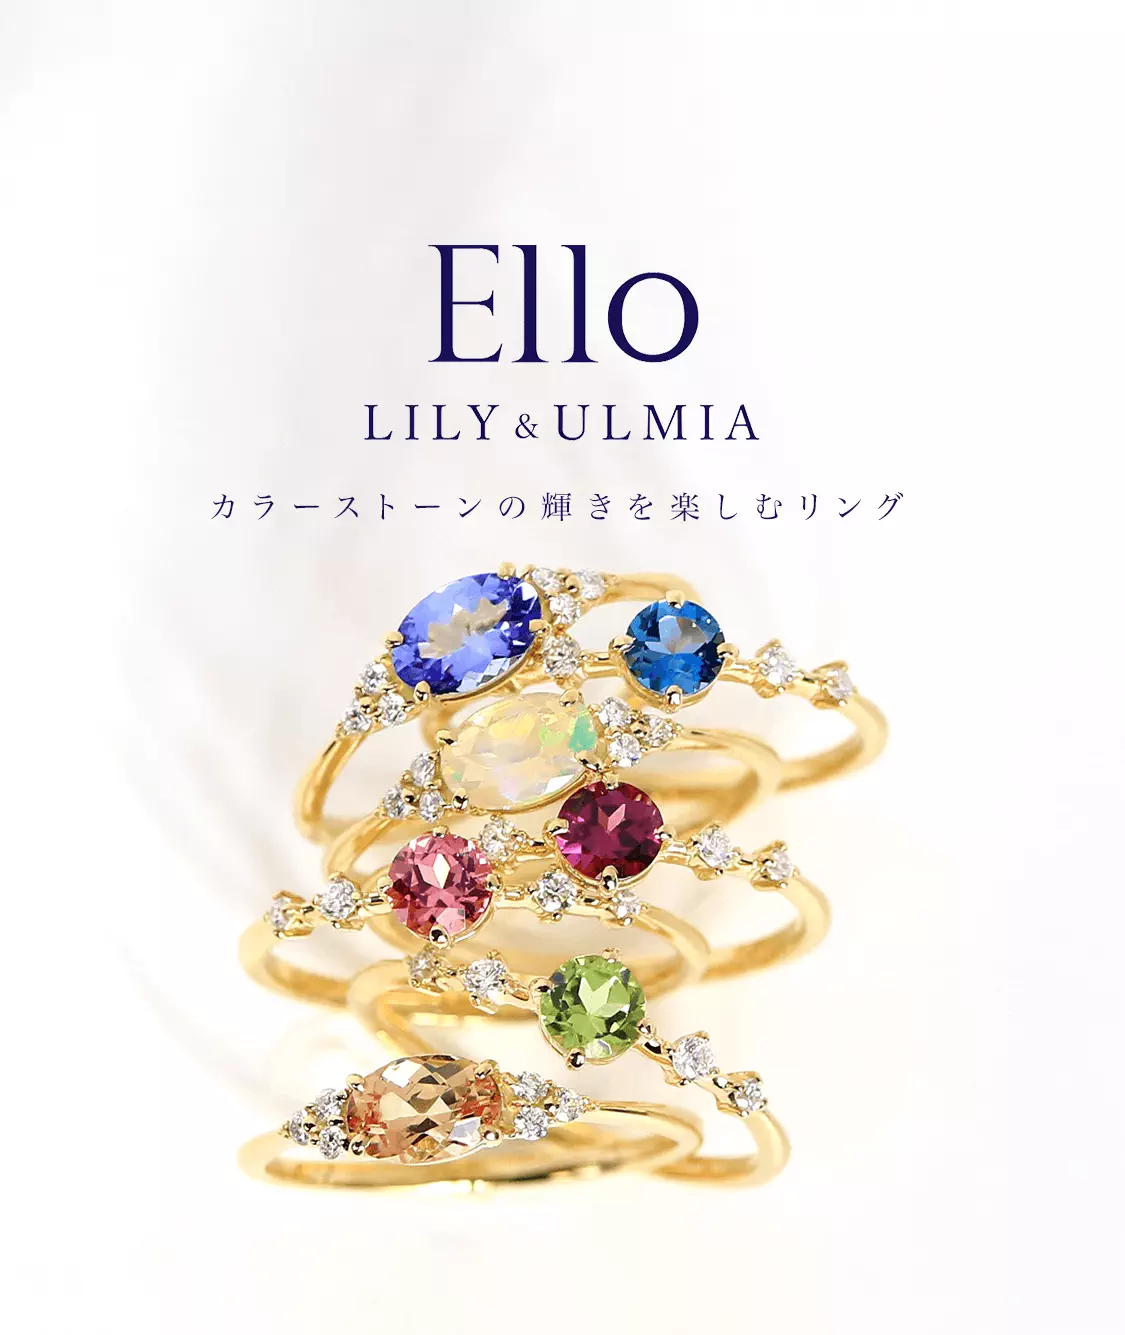 Ello Lily & Ulmia カラーストーンの輝きを楽しむリング